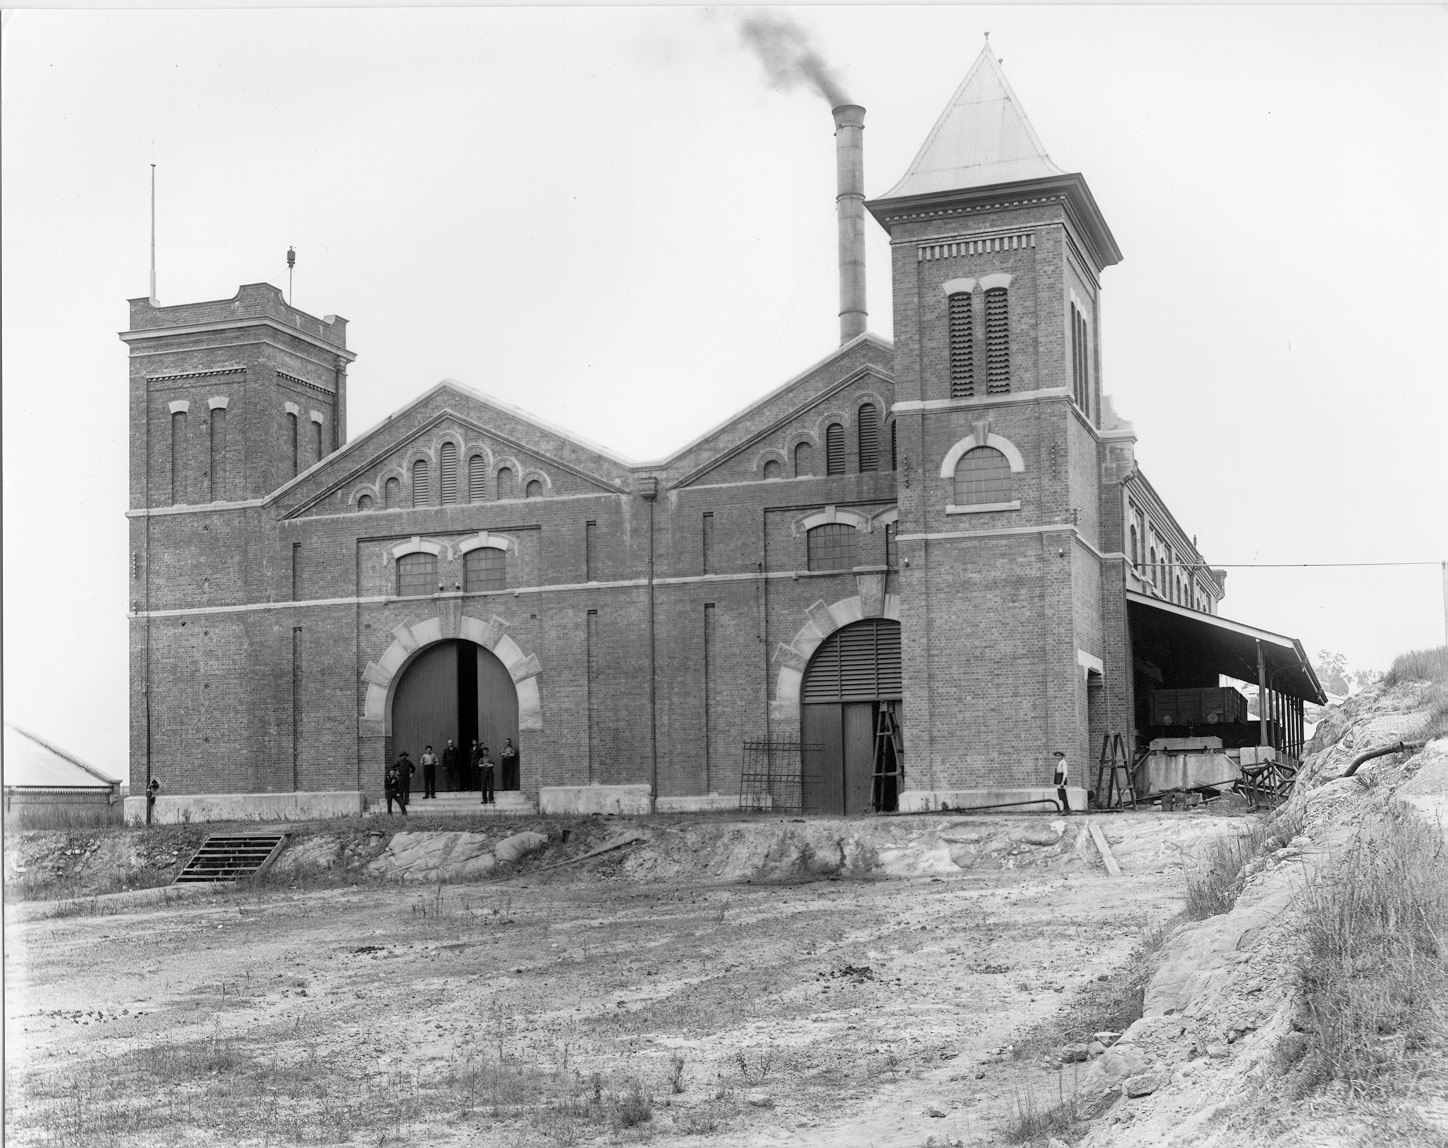 The Powerhouse in 1910